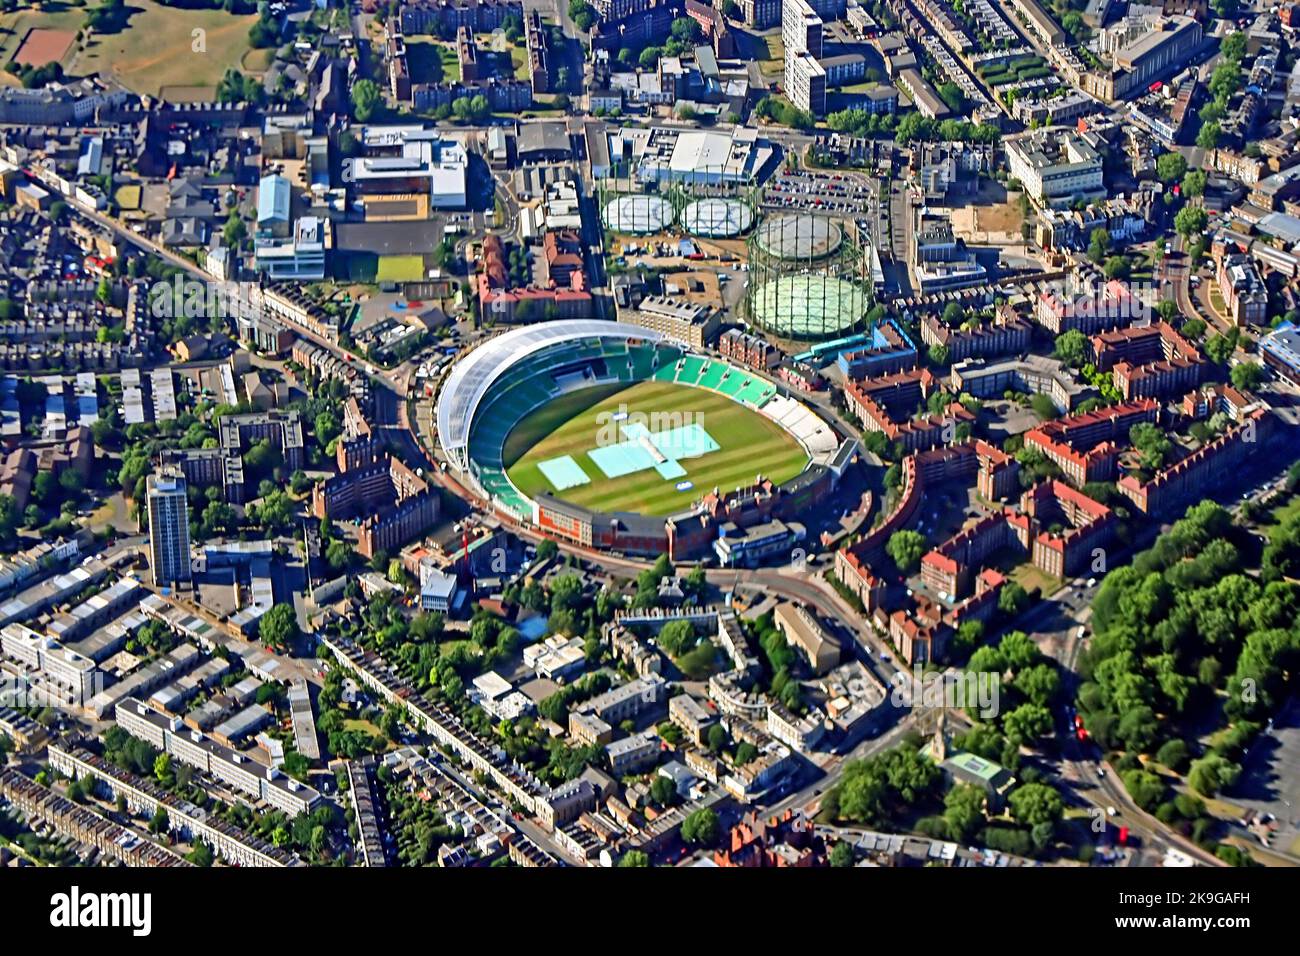 The Oval Cricket Ground, Kennington, Londres, Royaume-Uni Banque D'Images